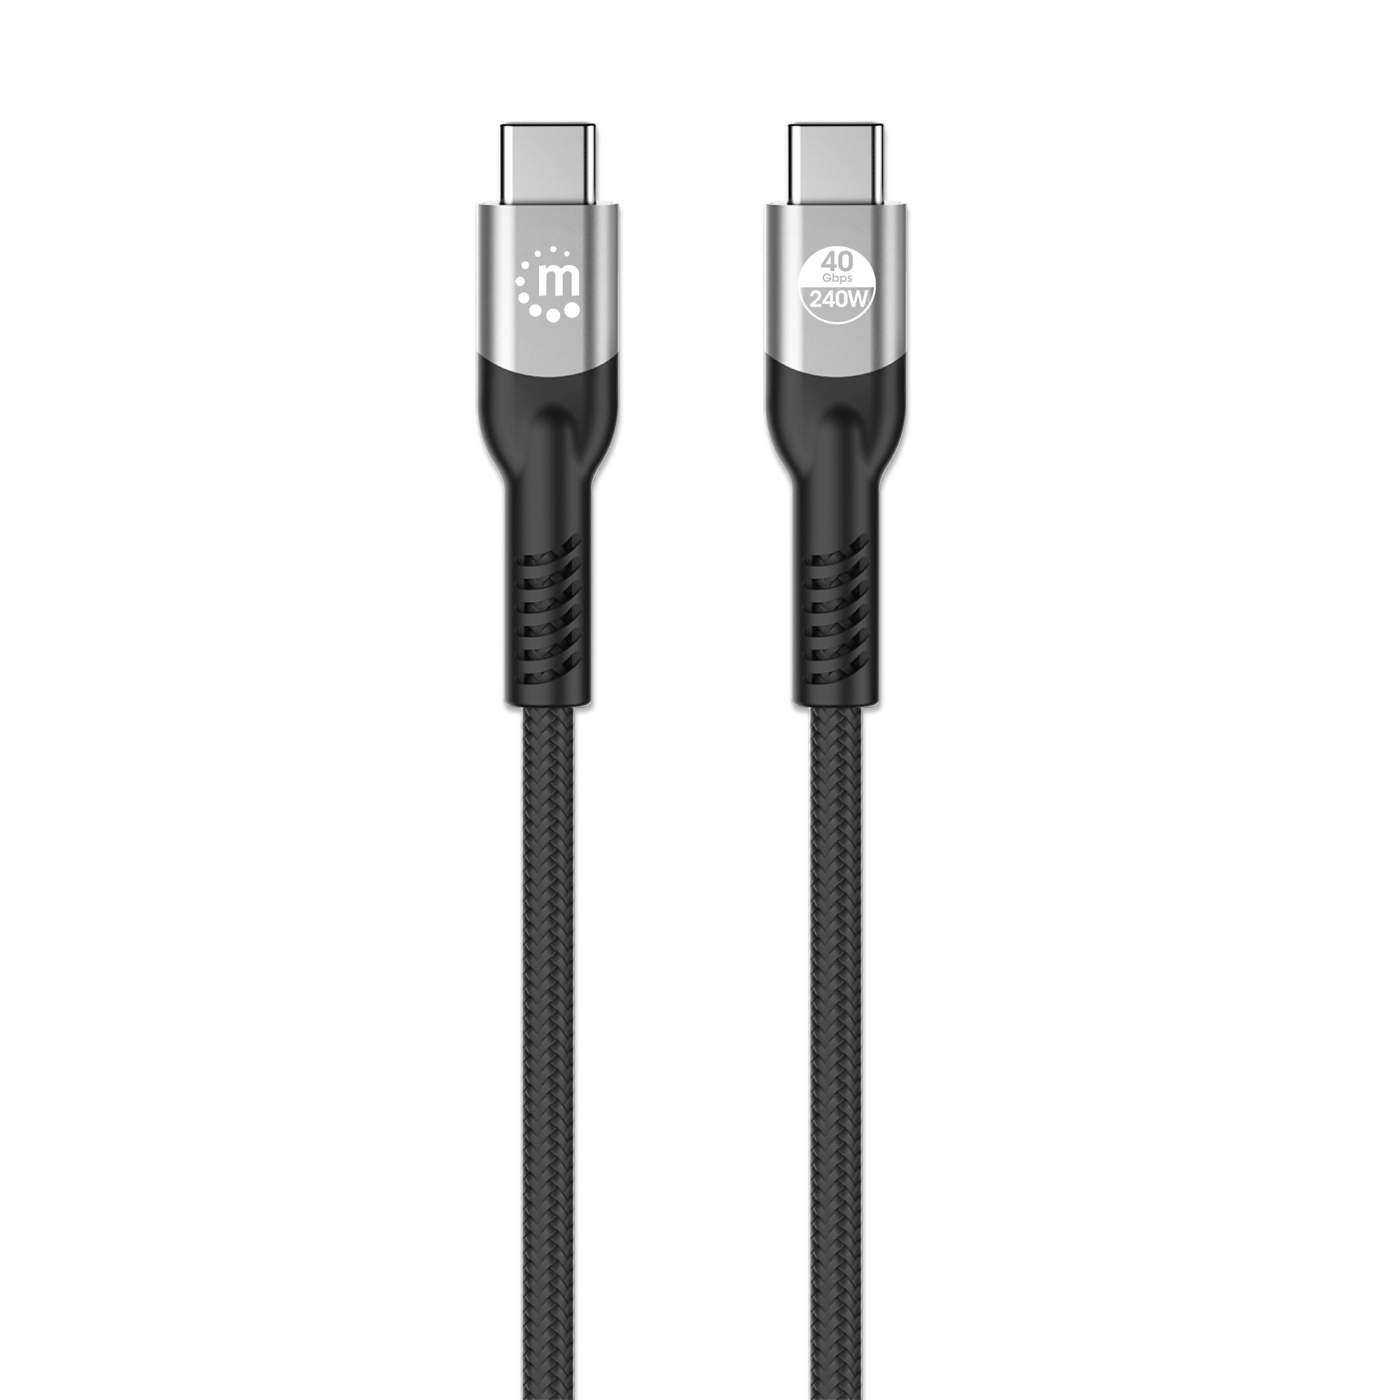 Câble Apple iPhone Lightning vers USB Type-C Mâle